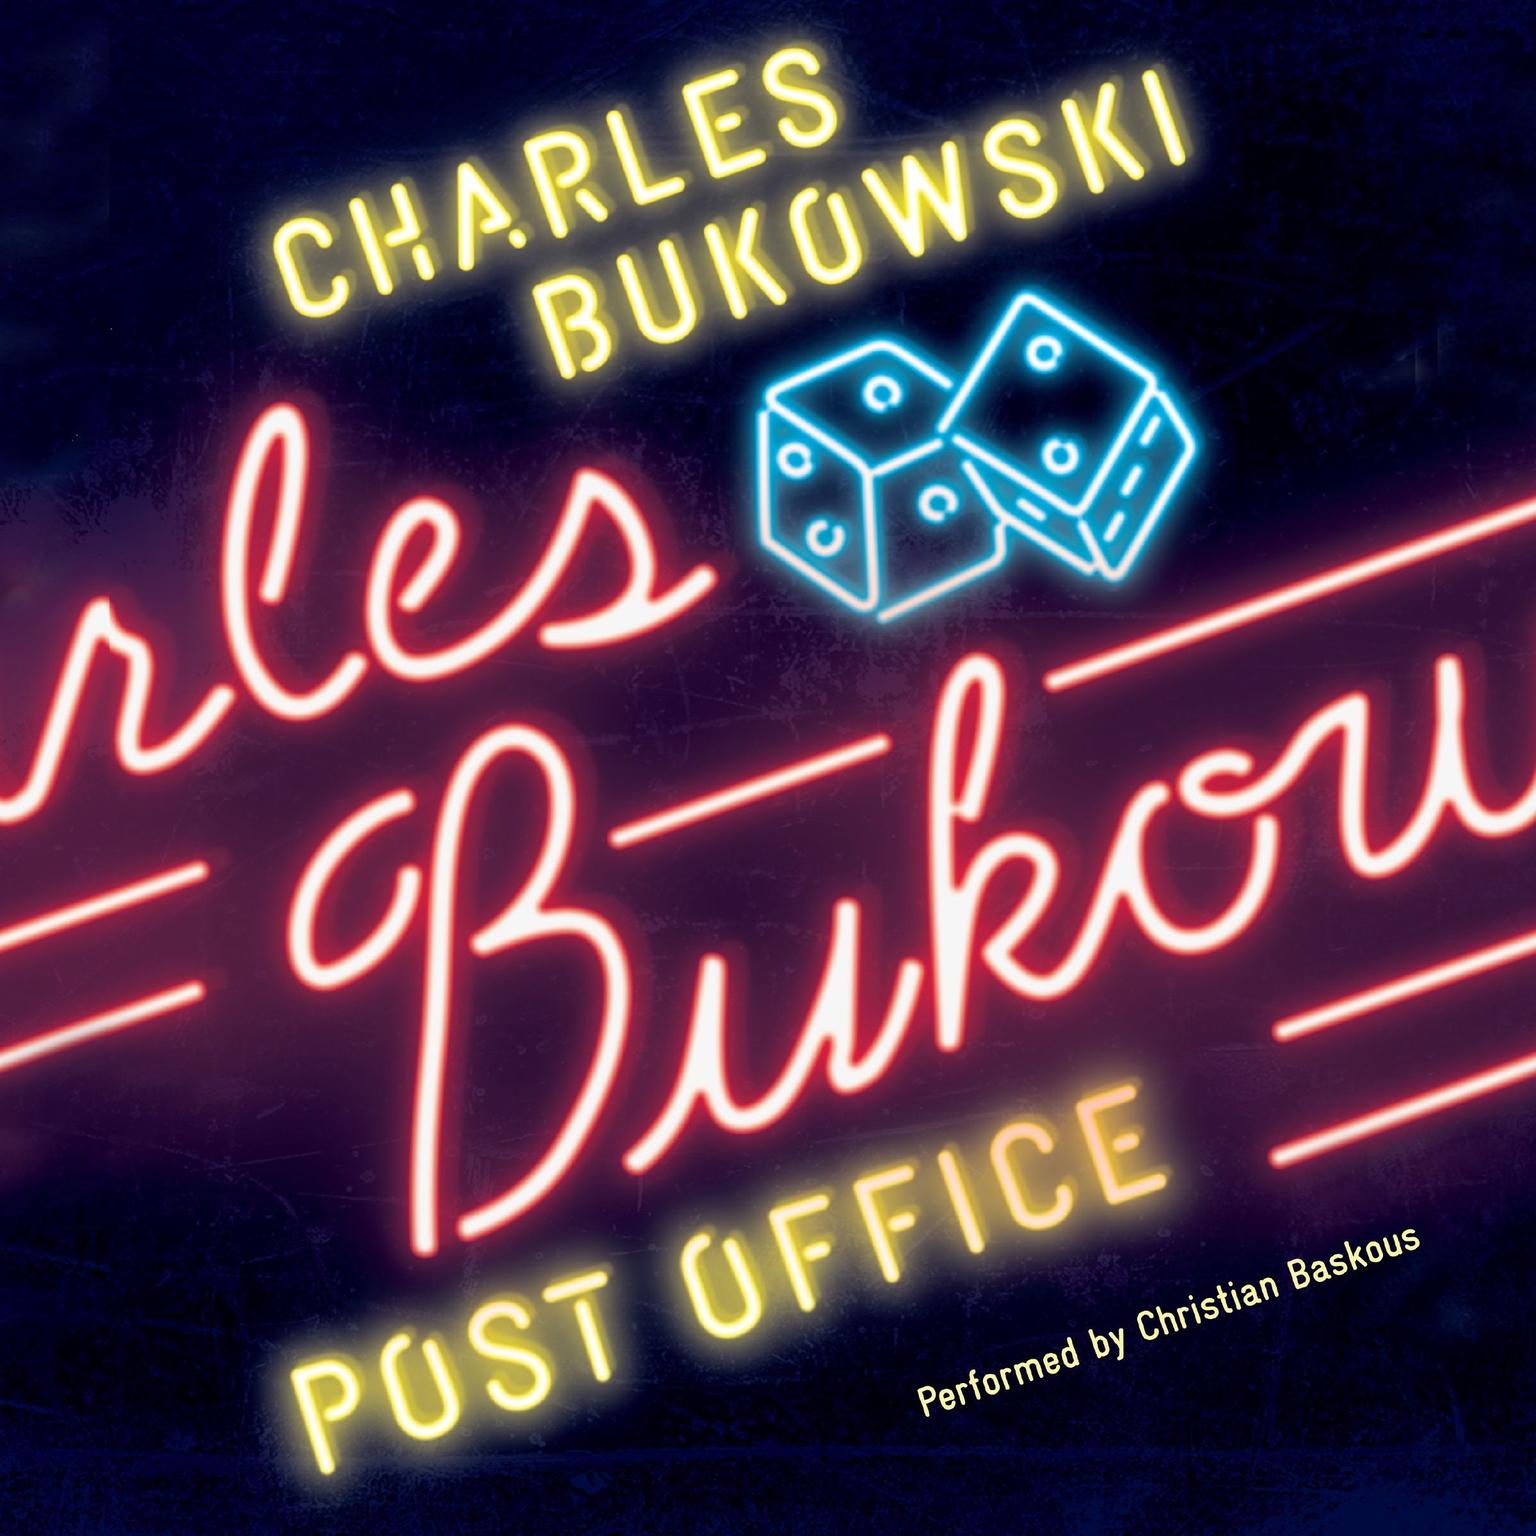 Post Office: A Novel Audiobook, by Charles Bukowski